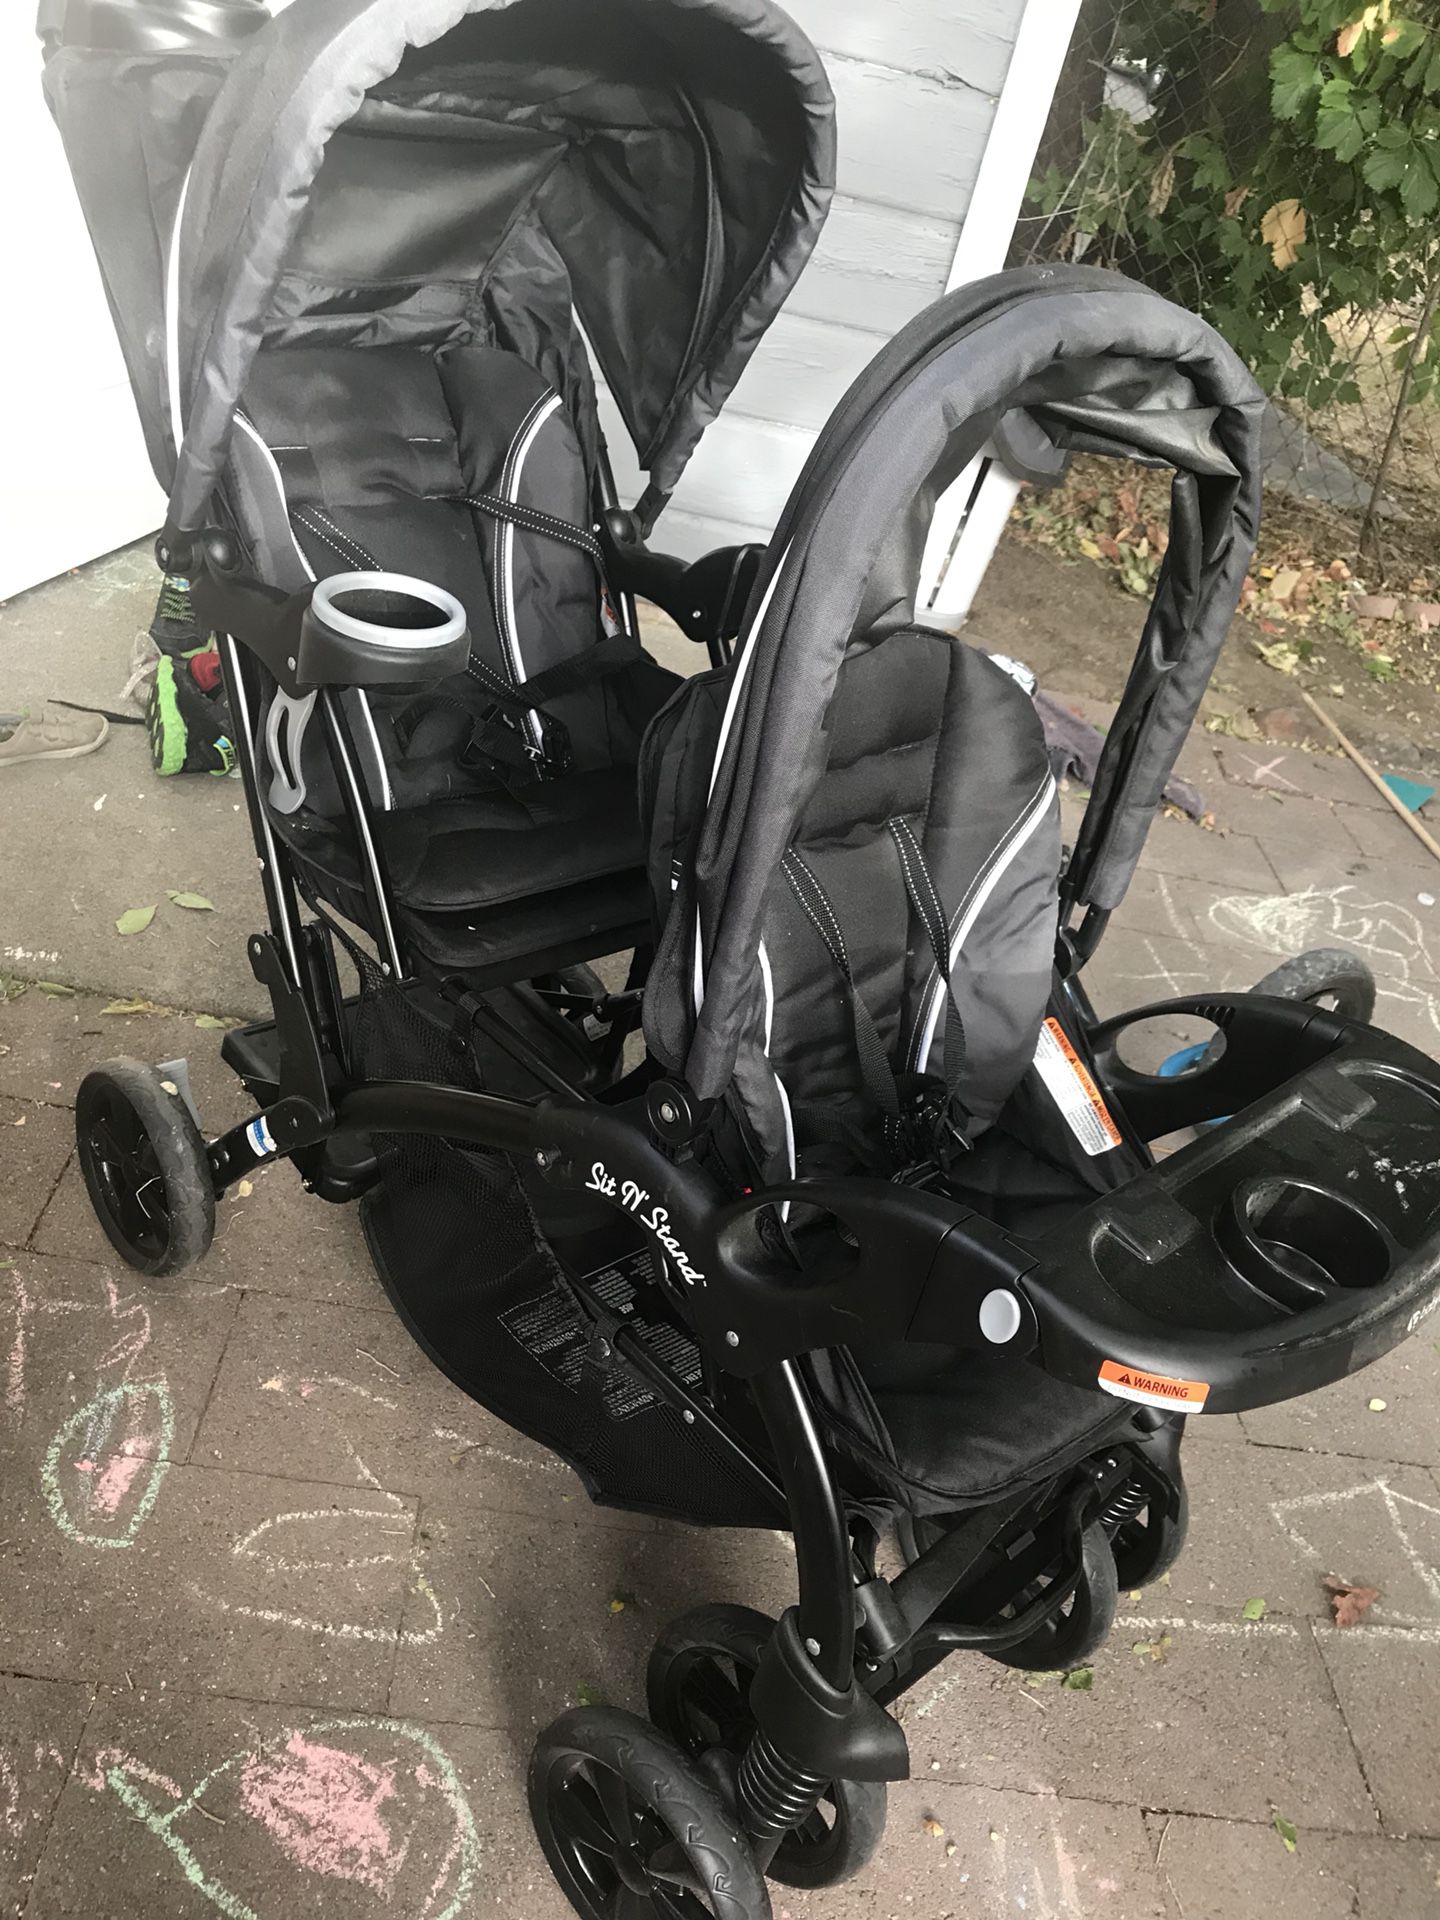 New Baby Stroller